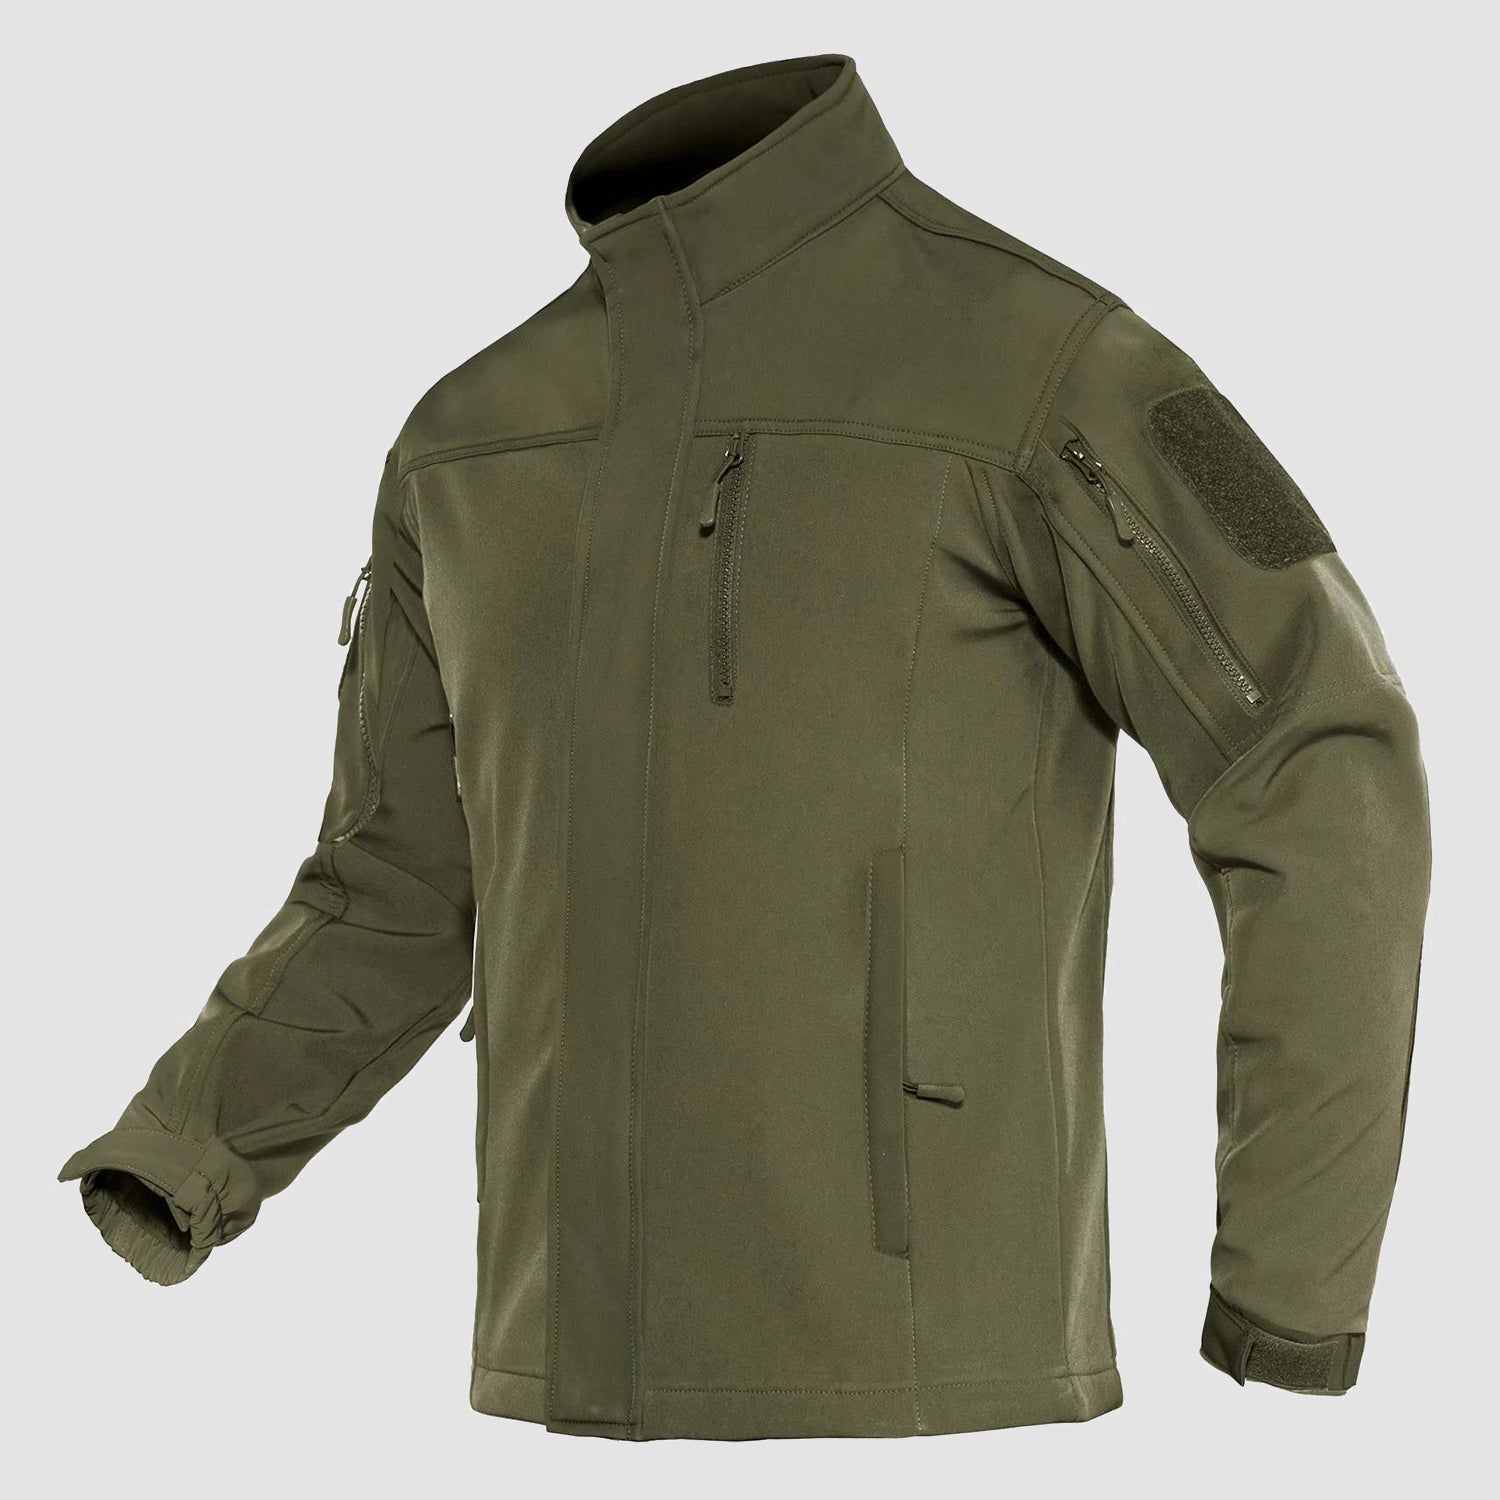 Men's Tactical Jacket, Hiking Winter Jacket